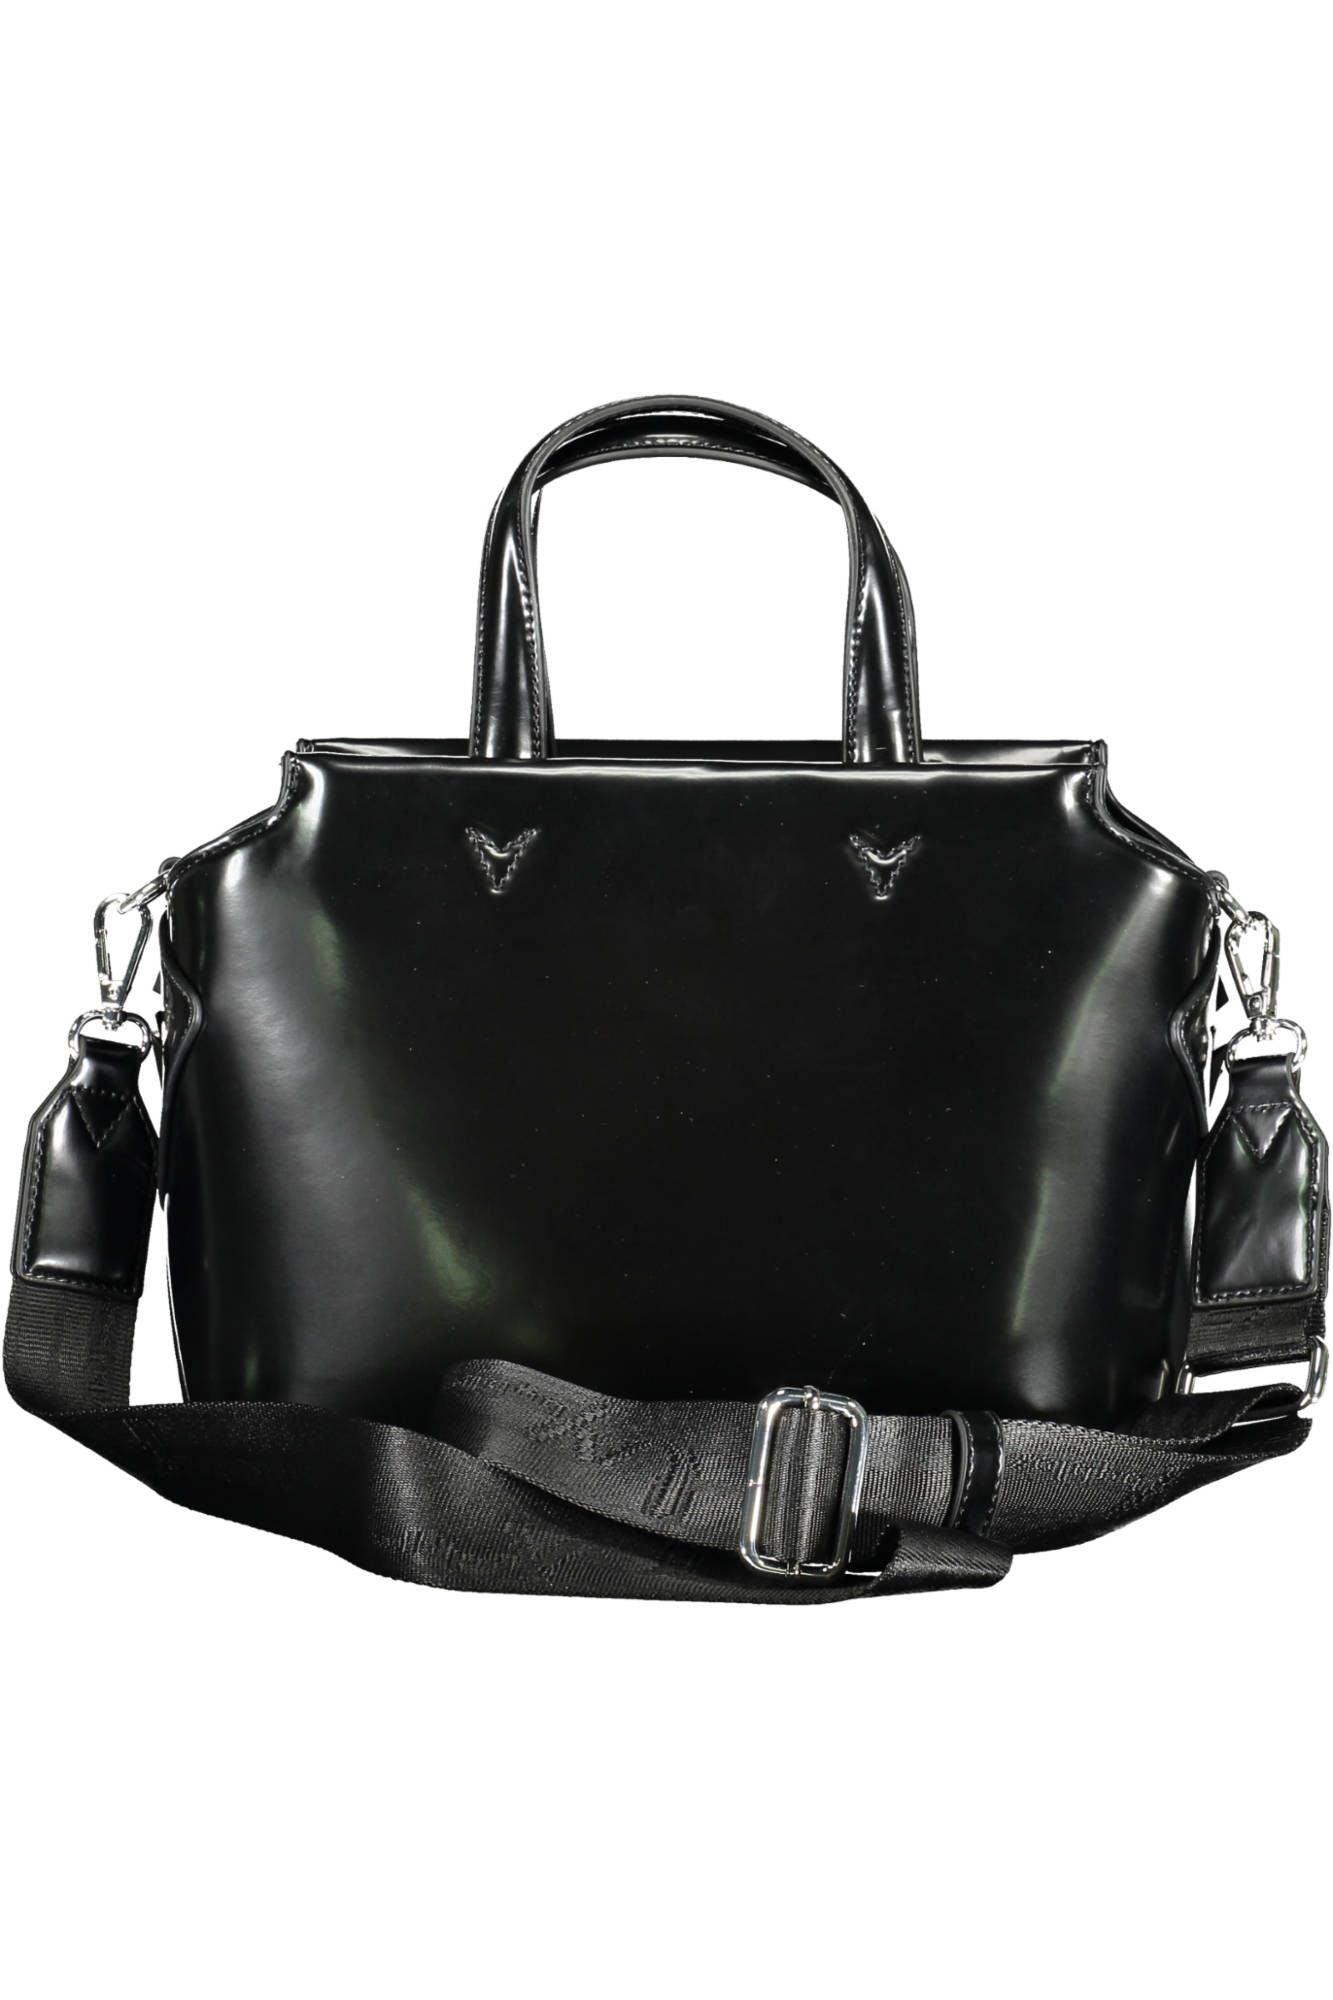 BYBLOS Elegant Black Two-Handle Bag with Contrasting Details - PER.FASHION